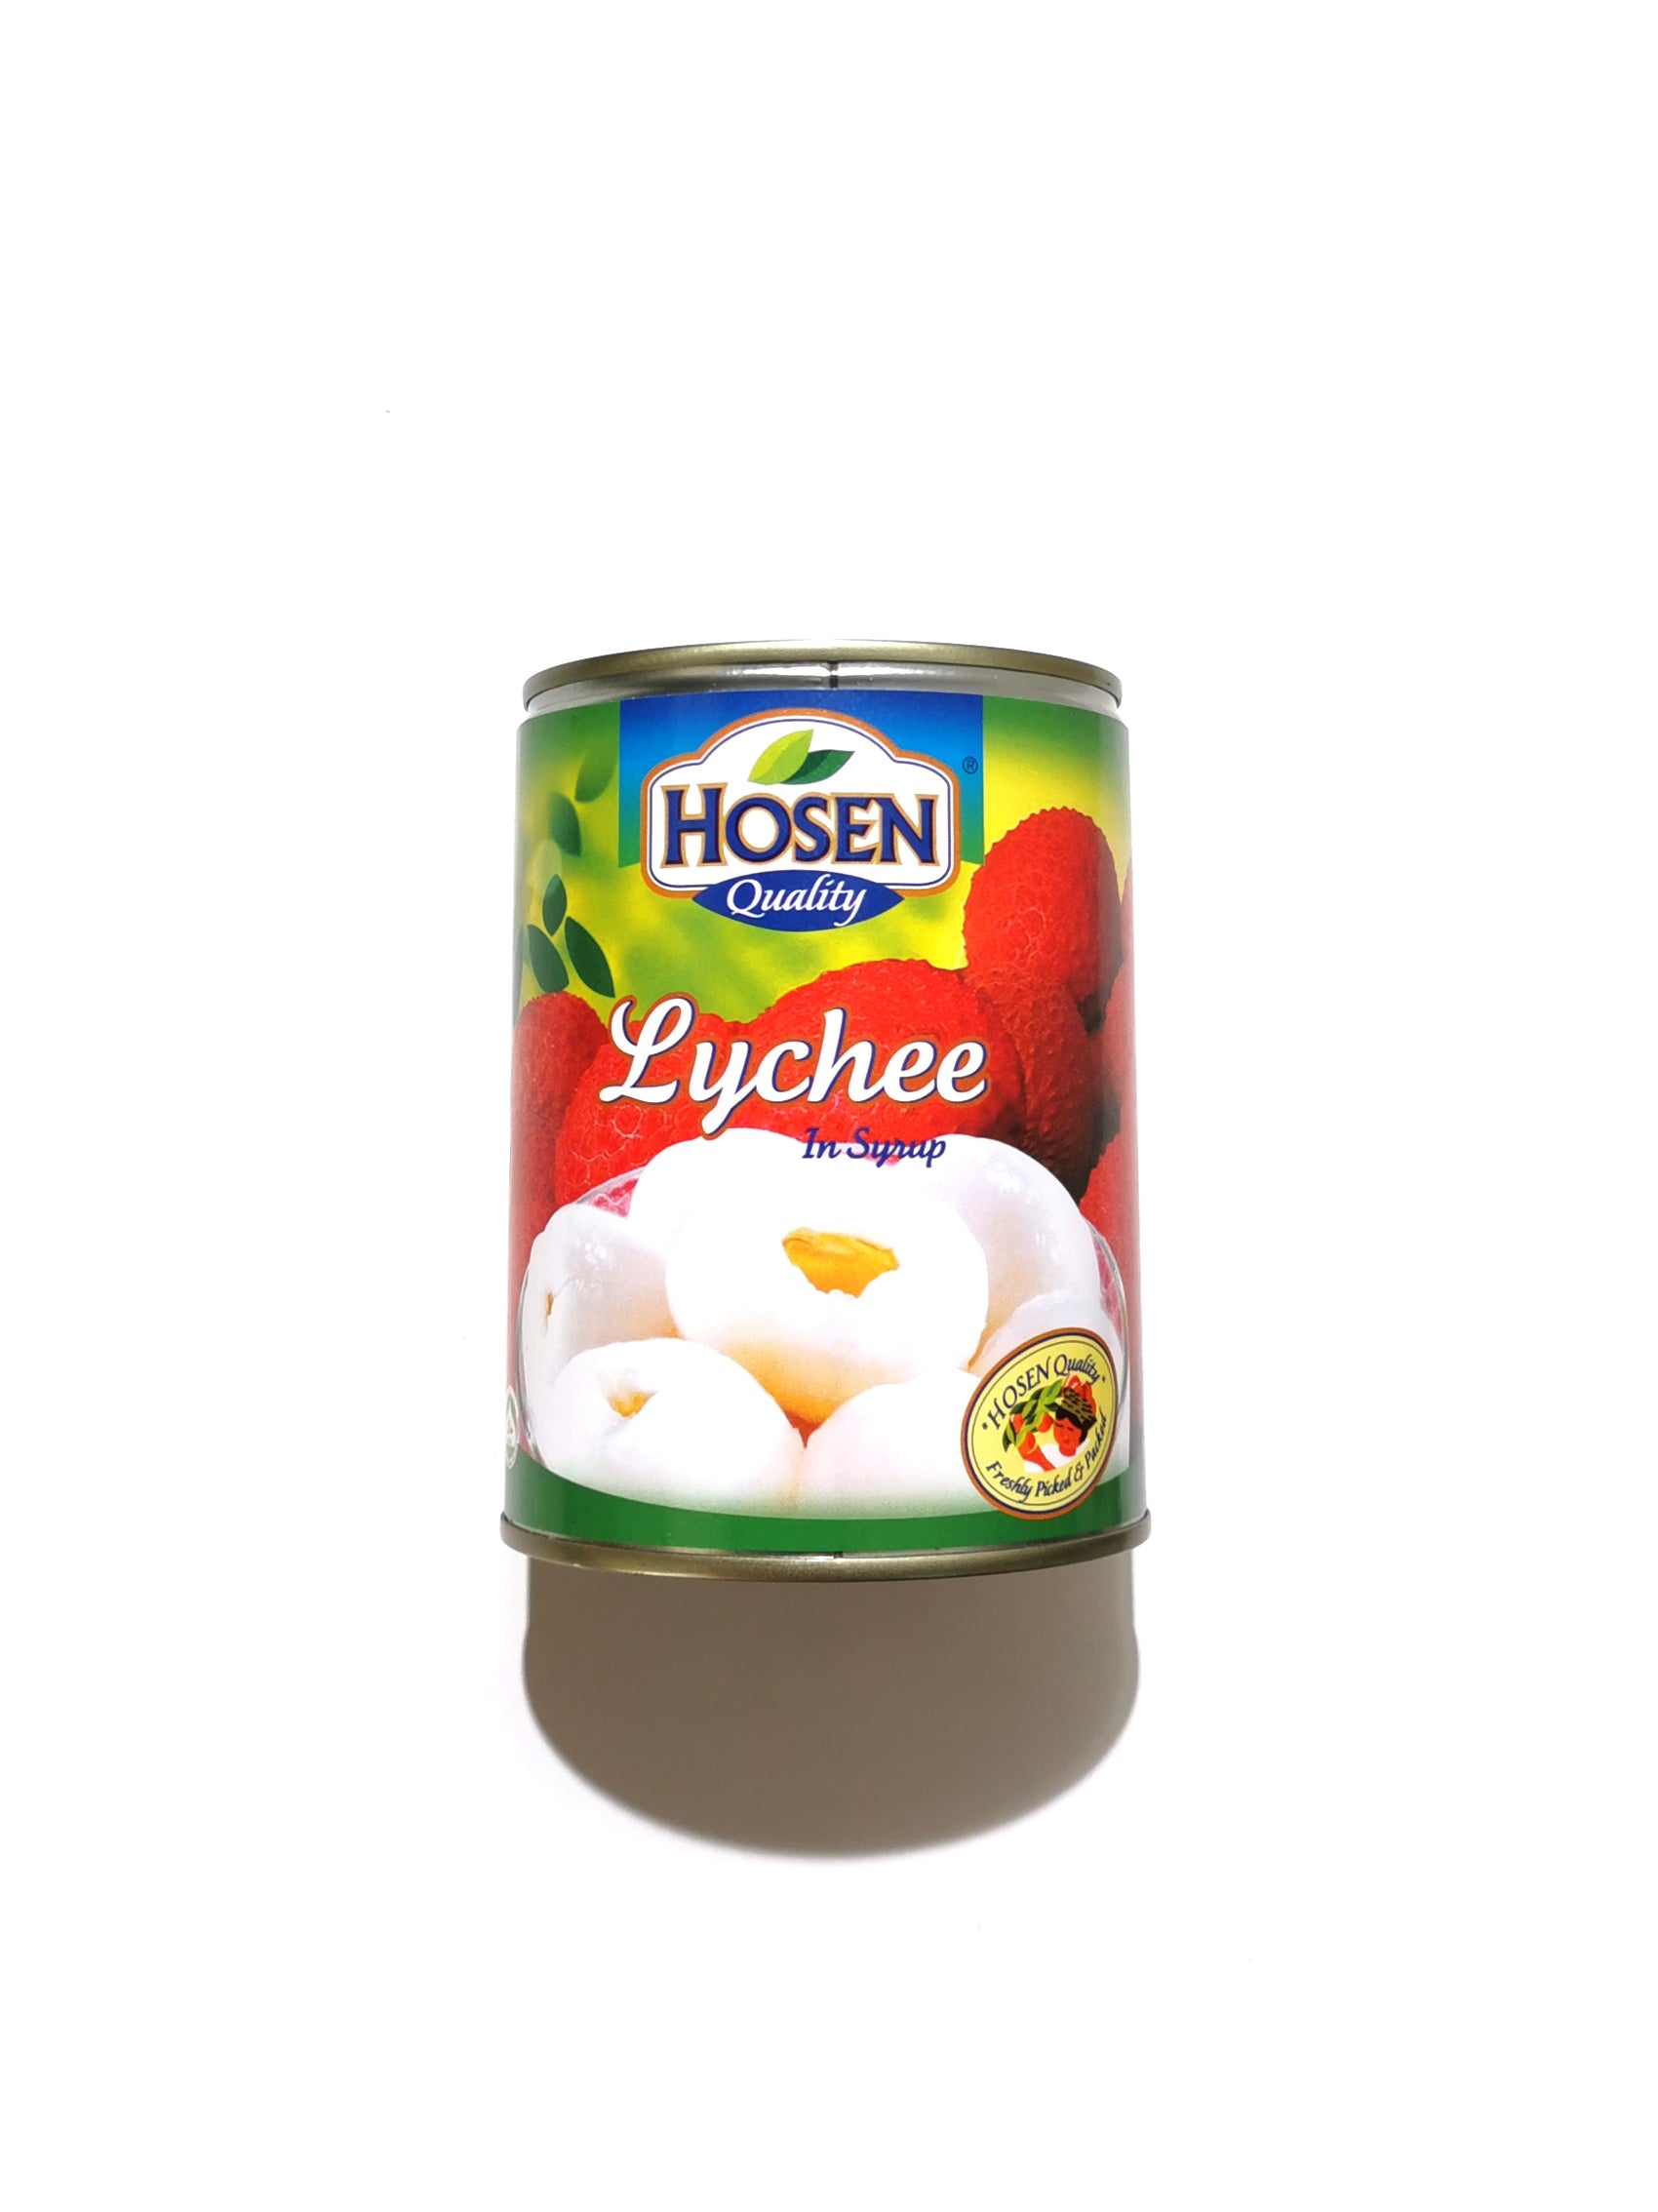 Hosen Lychee in Syrup 好顺品质荔枝 - 565g